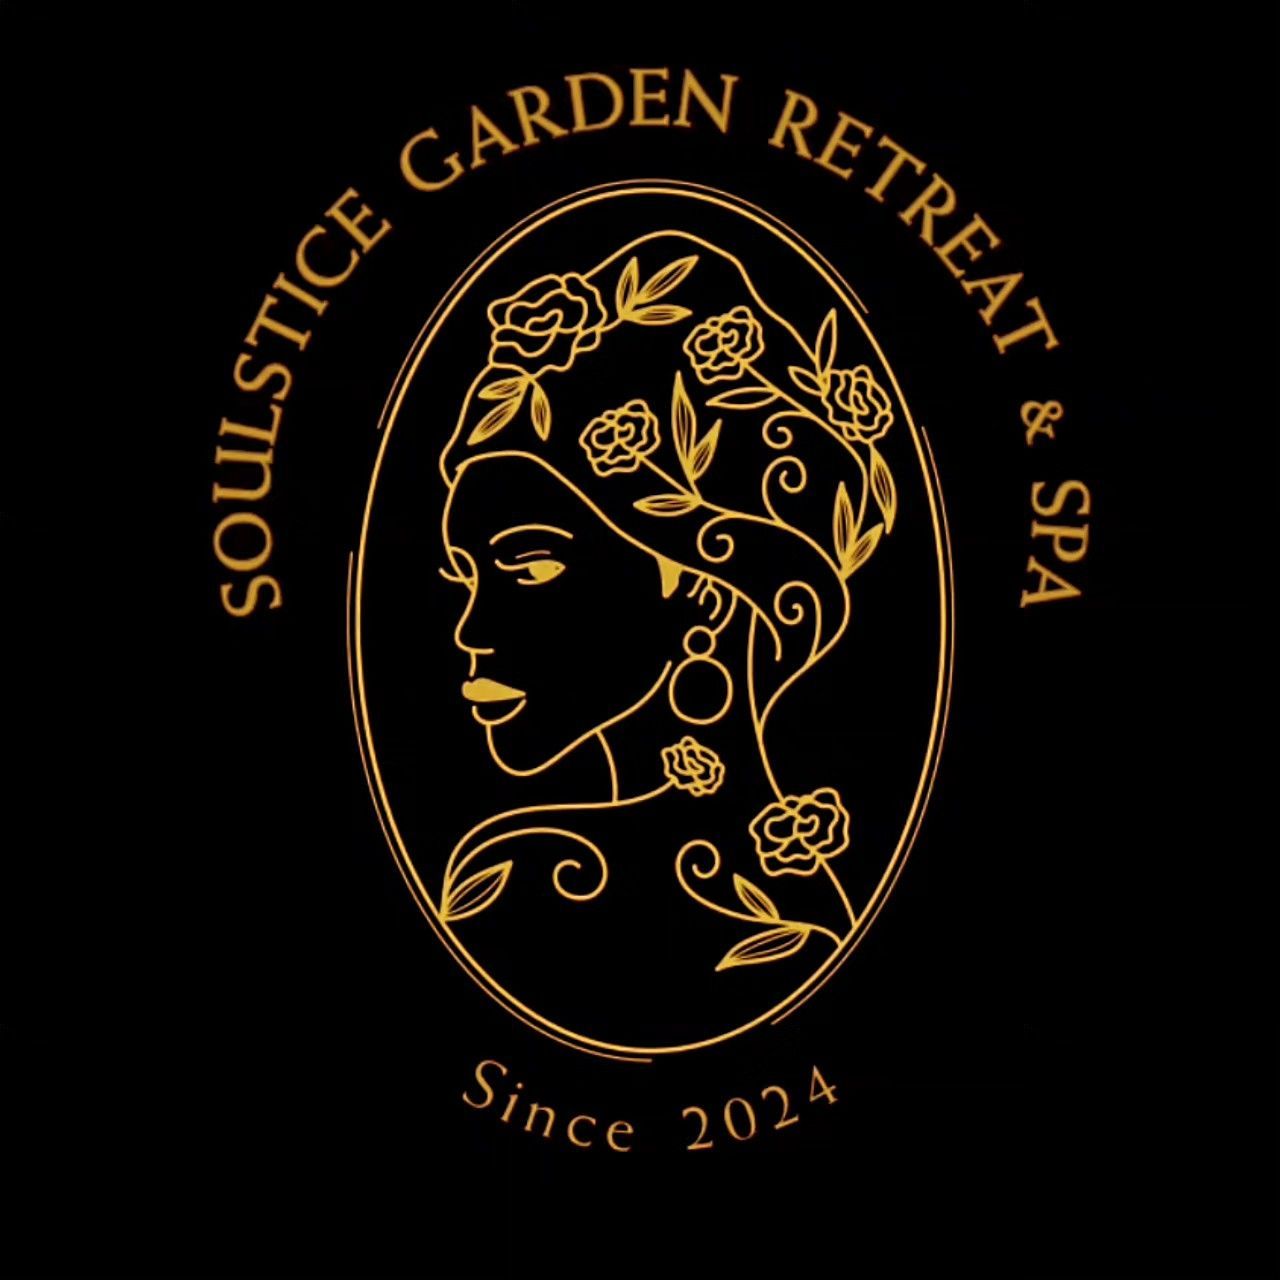 Soulstice Garden Retreat & Spa, 4410 Curry Ford Rd, Studio Blue Suites,  Suite 206, Orlando, 32812